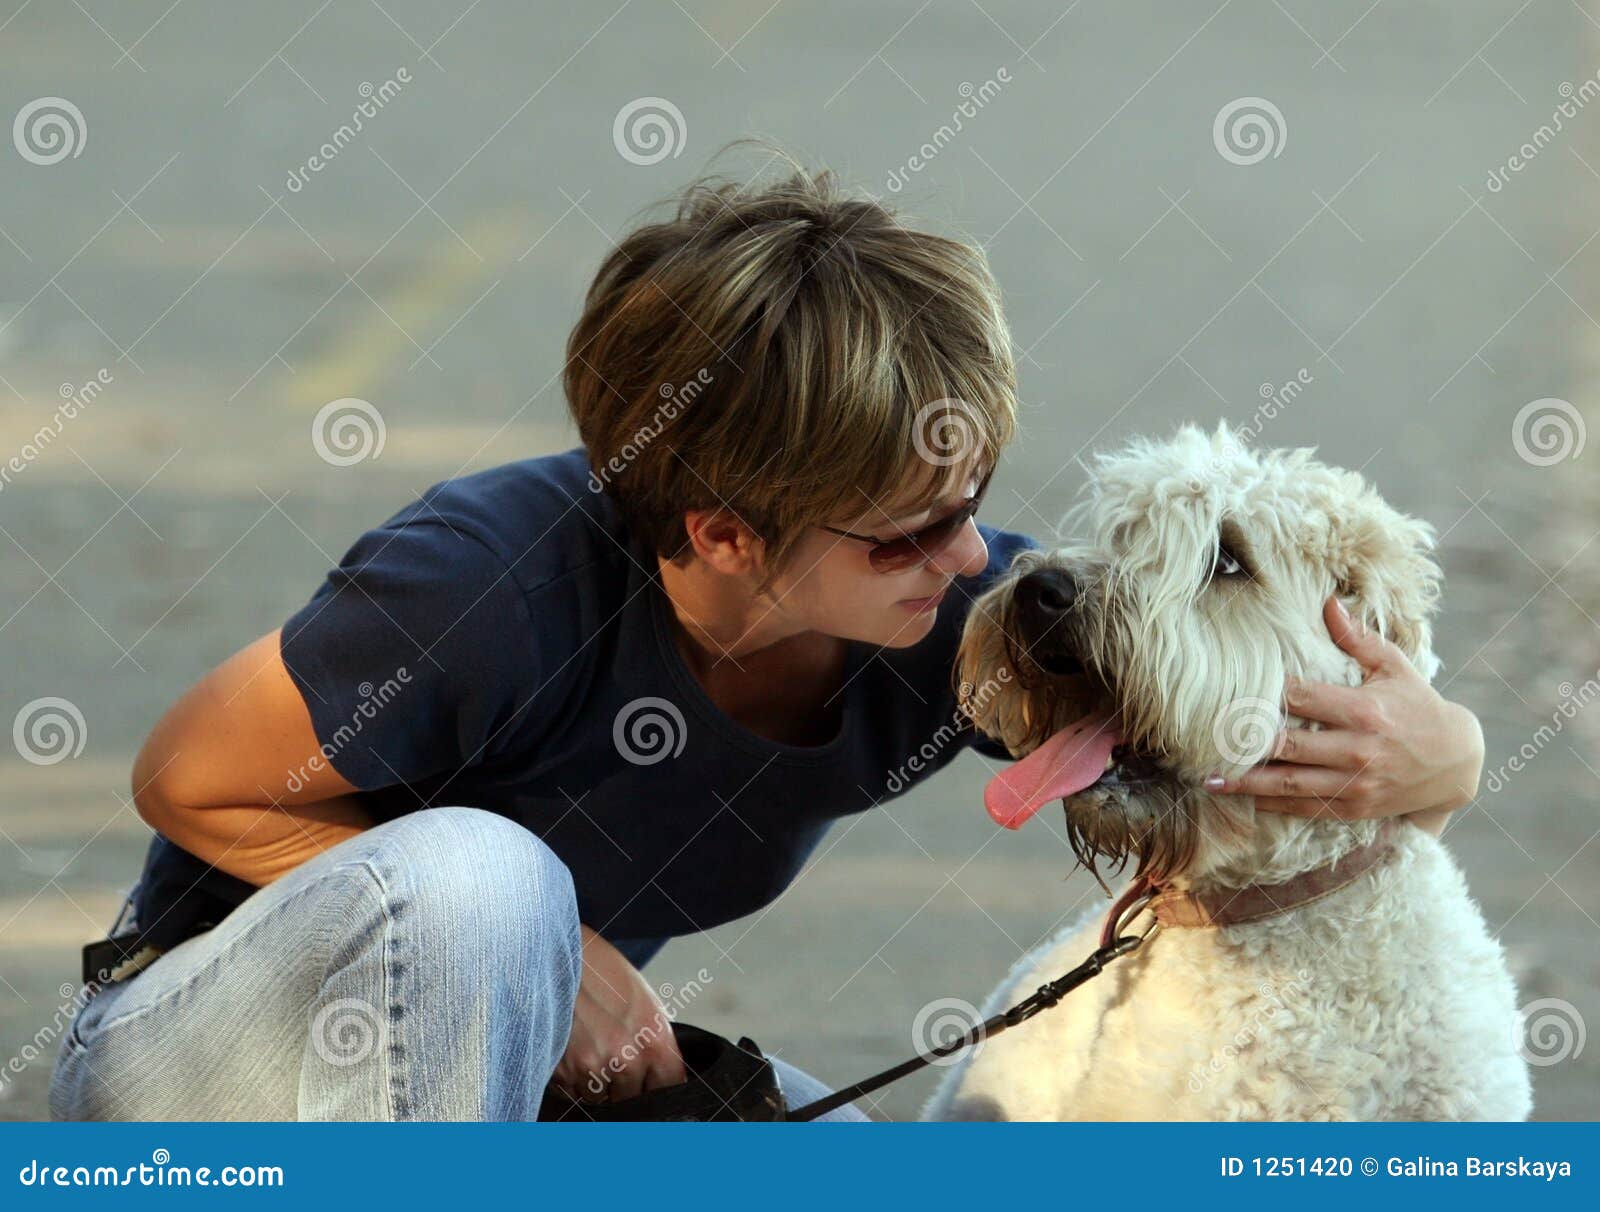 Frau mit ihrem Hund im Park